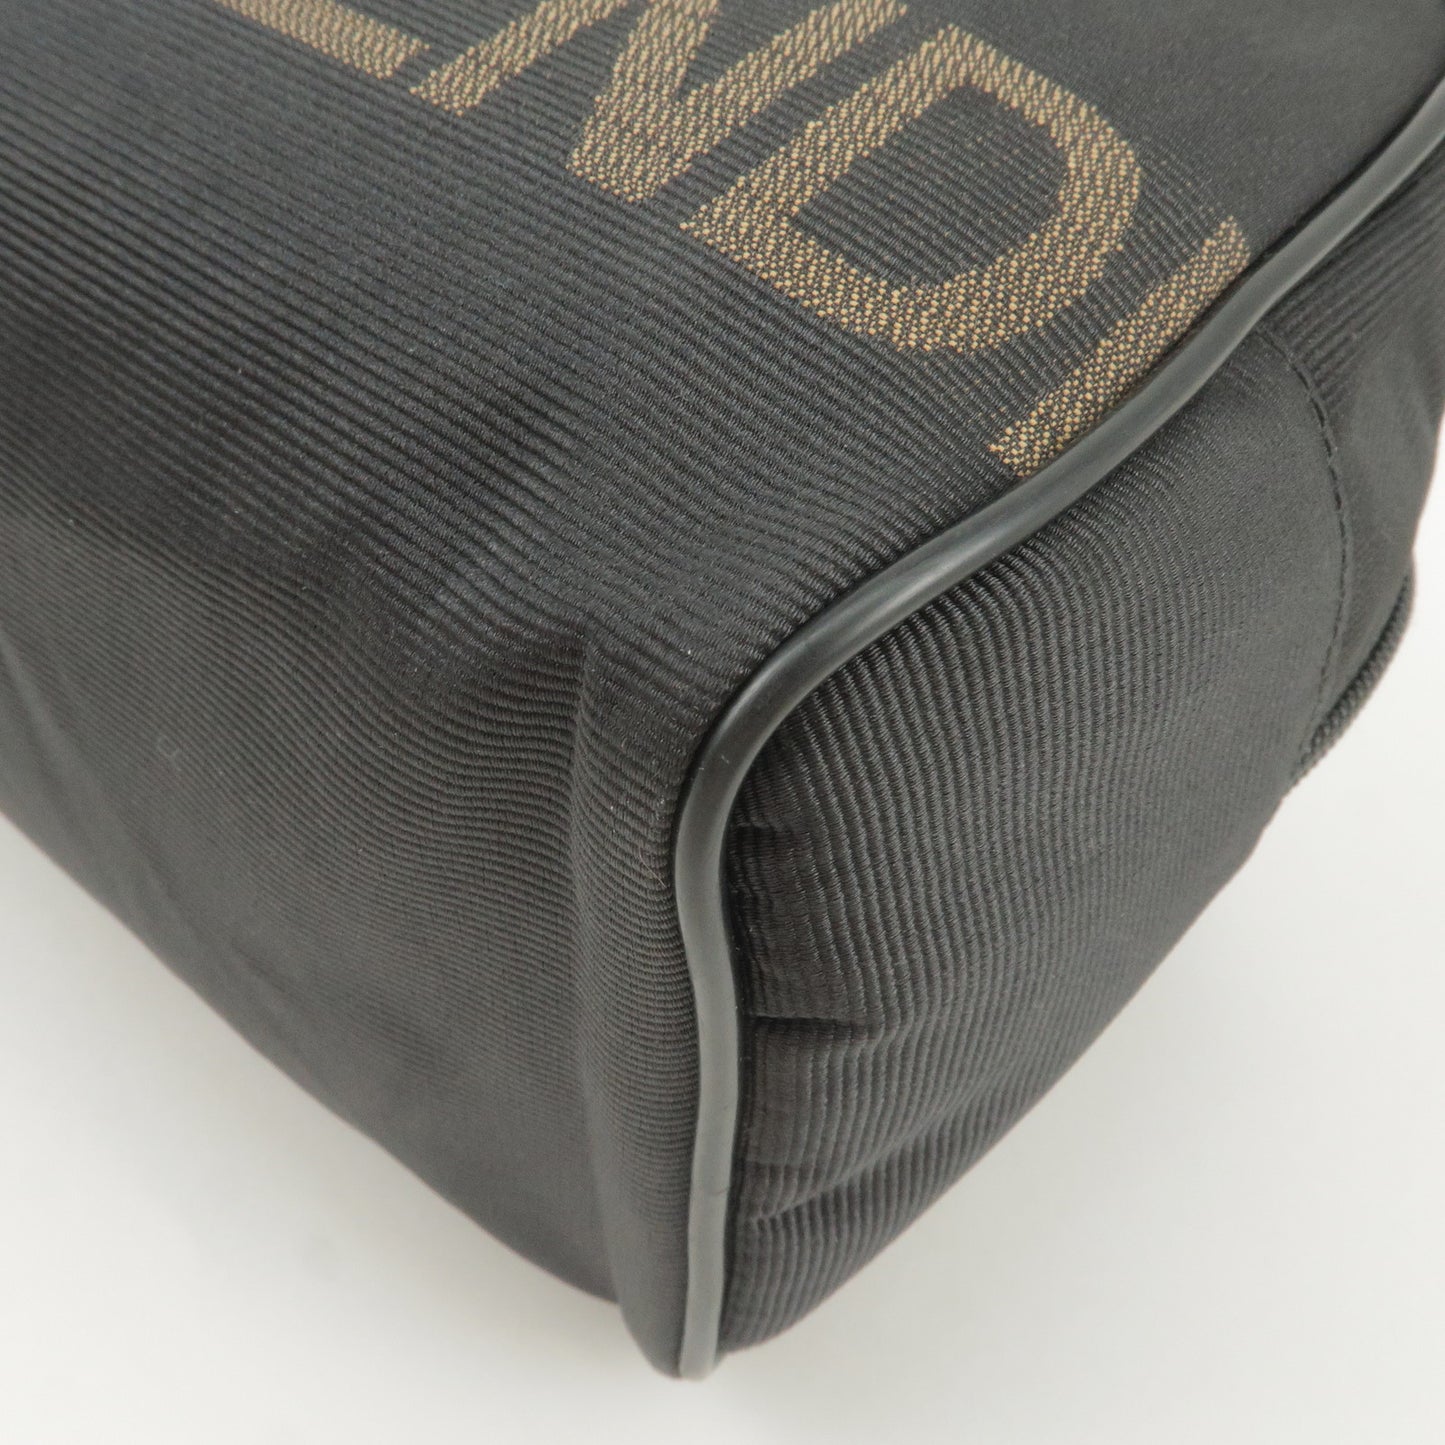 Fendi Logo Canvas Leather Second Pouch Black Beige